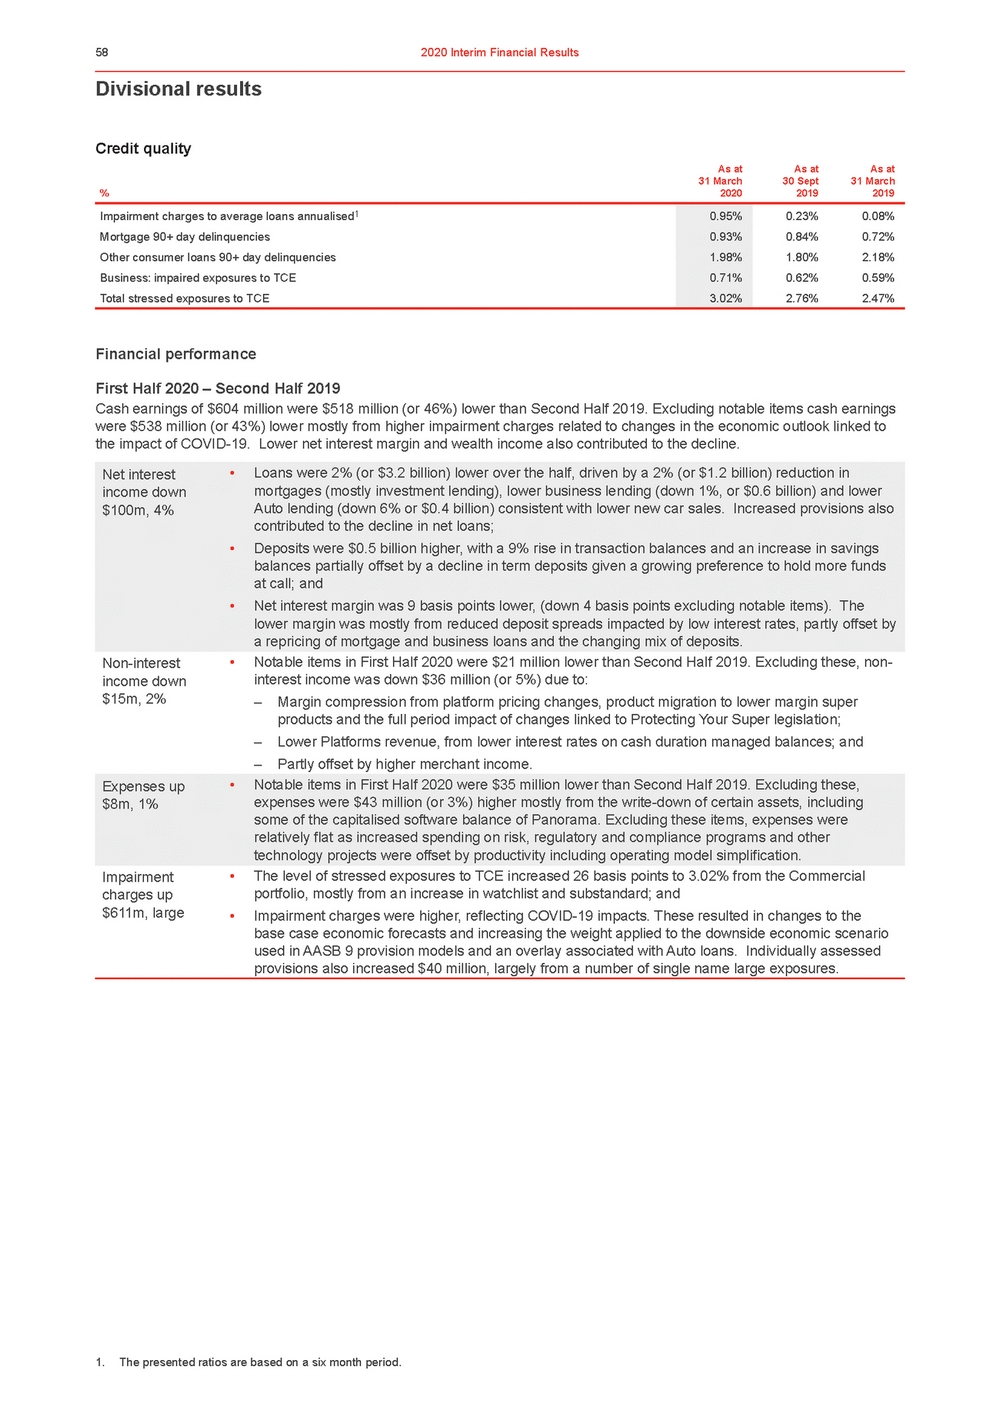 11676-3-ex1_westpac 2020 interim financial results announcement_page_063.jpg